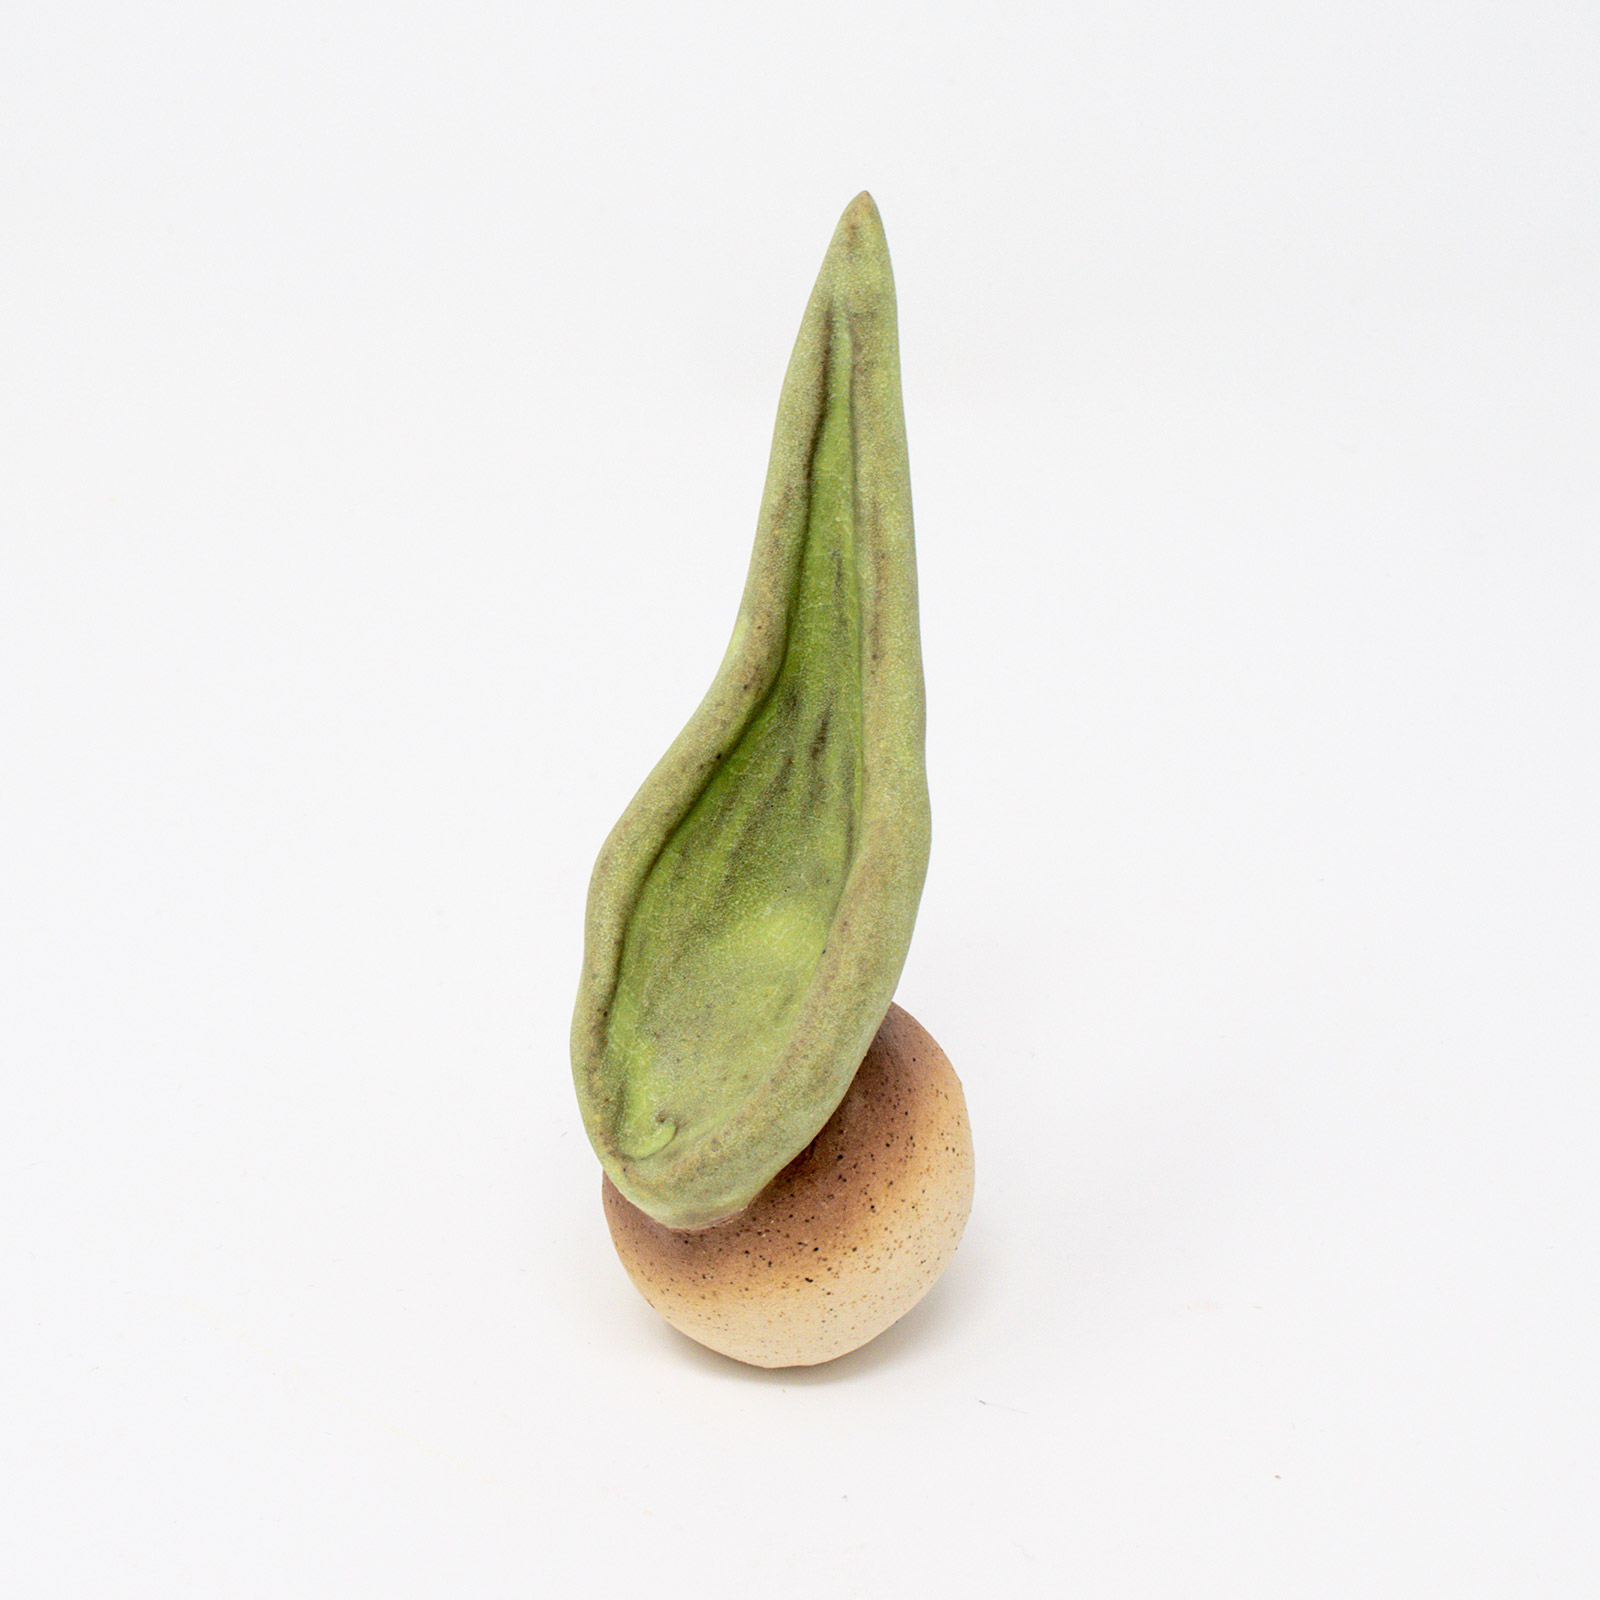 Tulip bulb product image